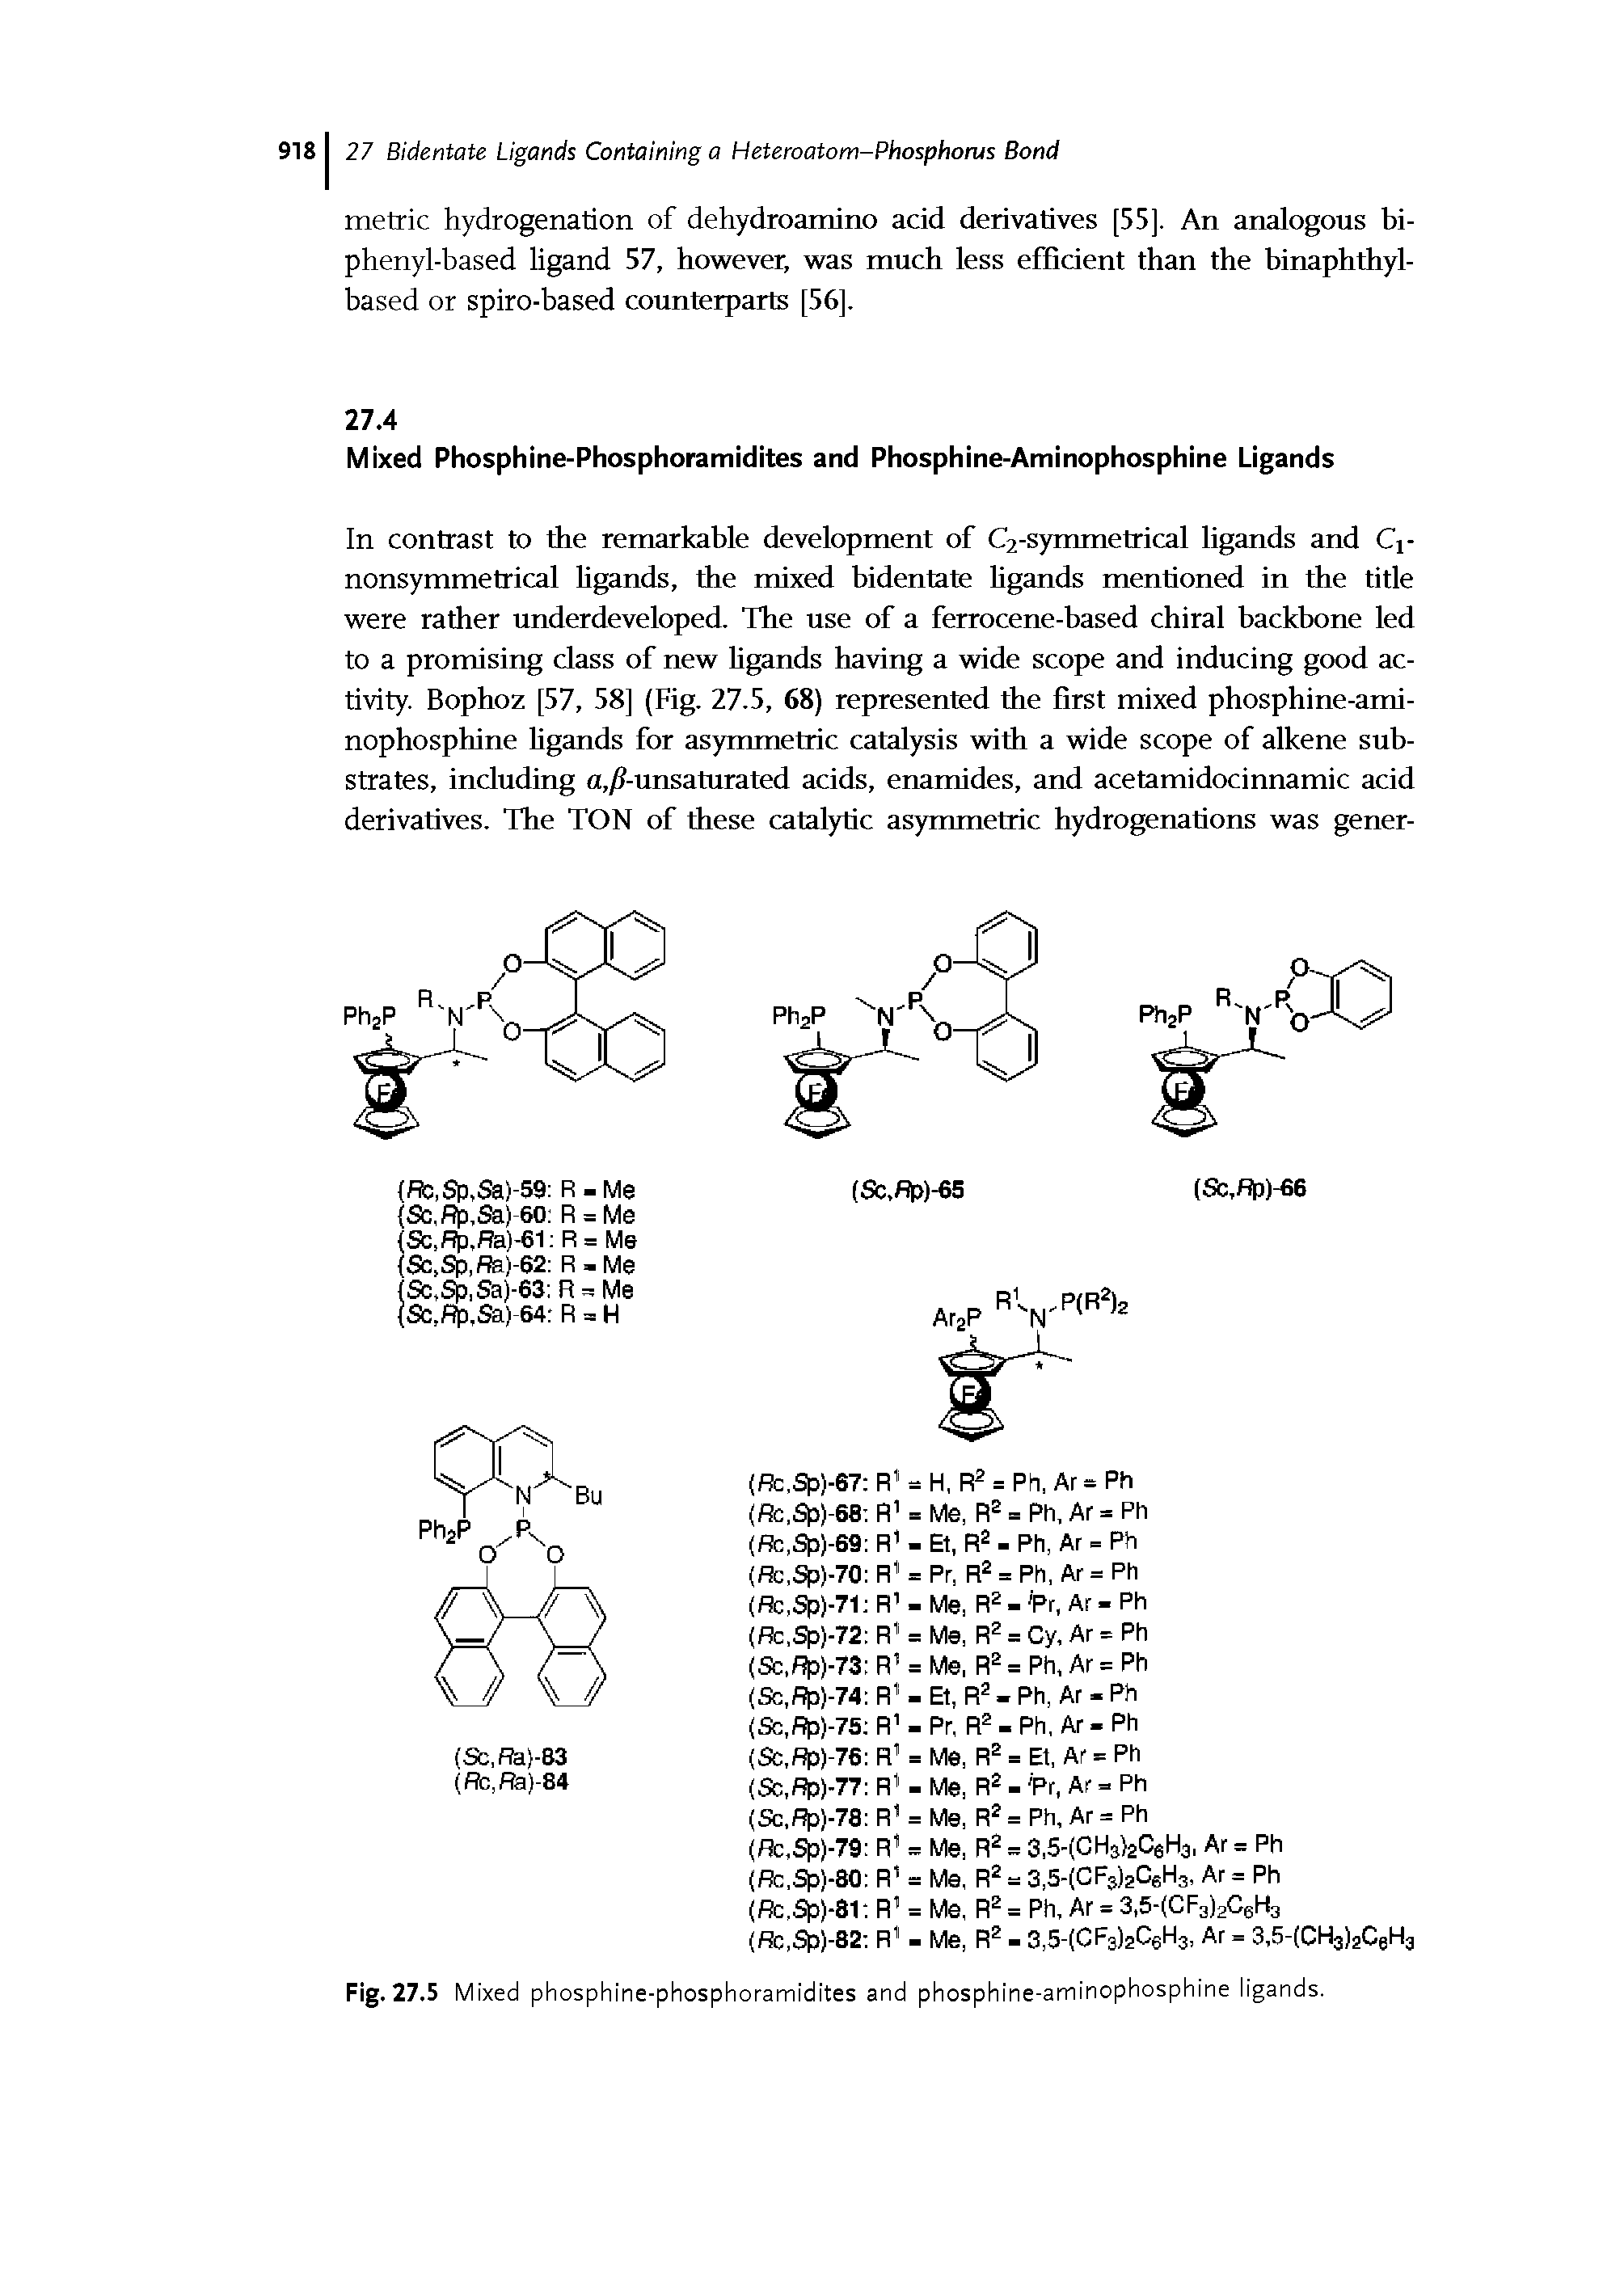 Fig. 27.5 Mixed phosphine-phosphoramidites and phosphine-aminophosphine ligands.